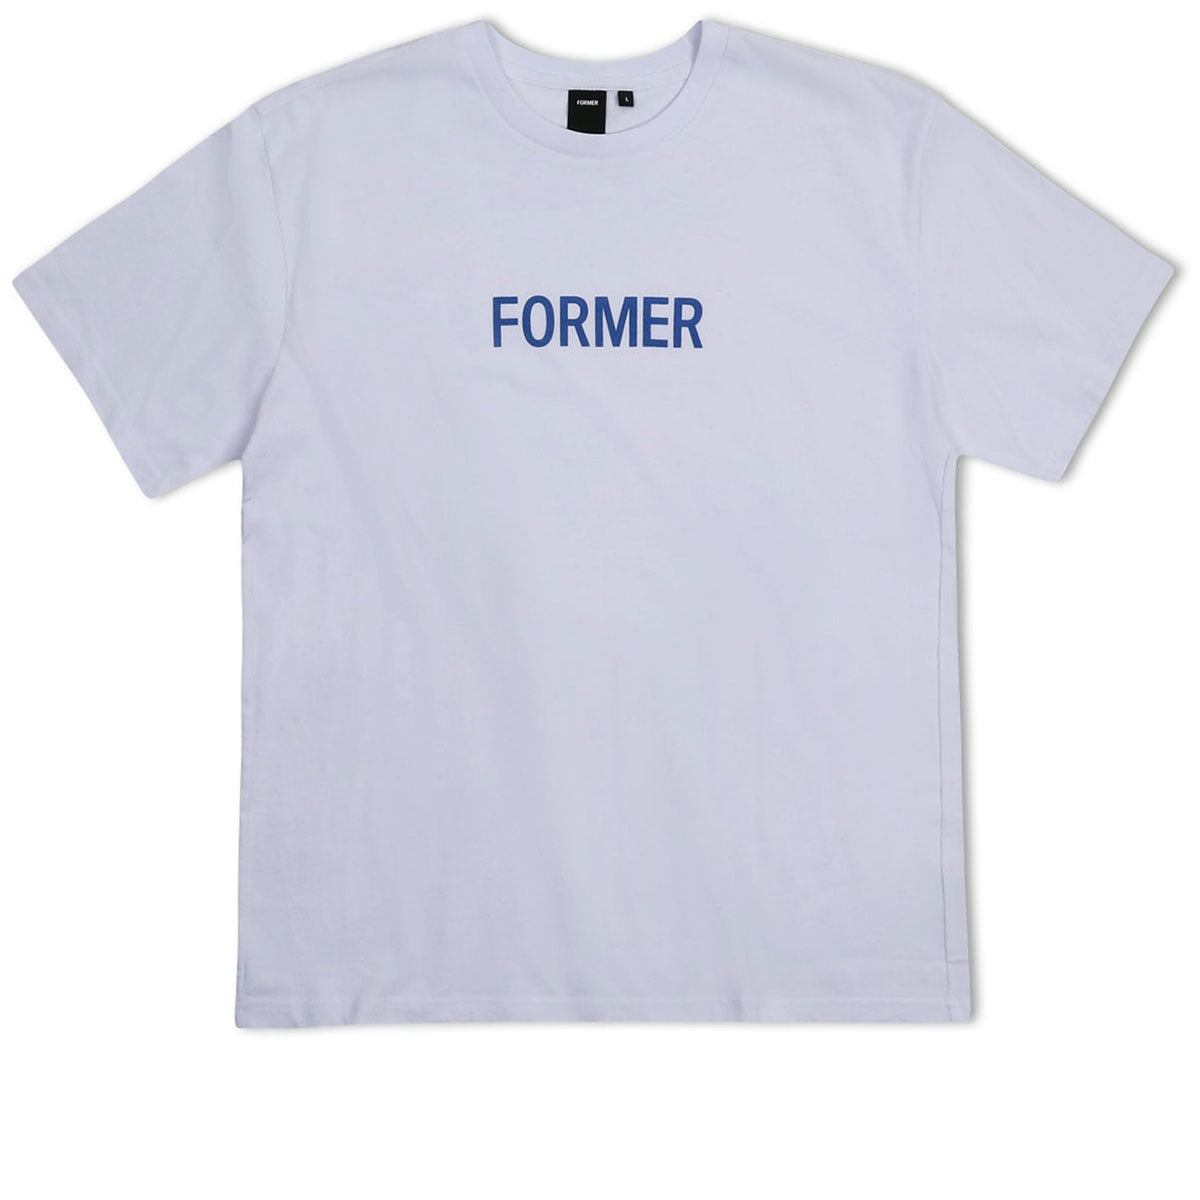 Former Legacy T-Shirt - White/Blue image 1